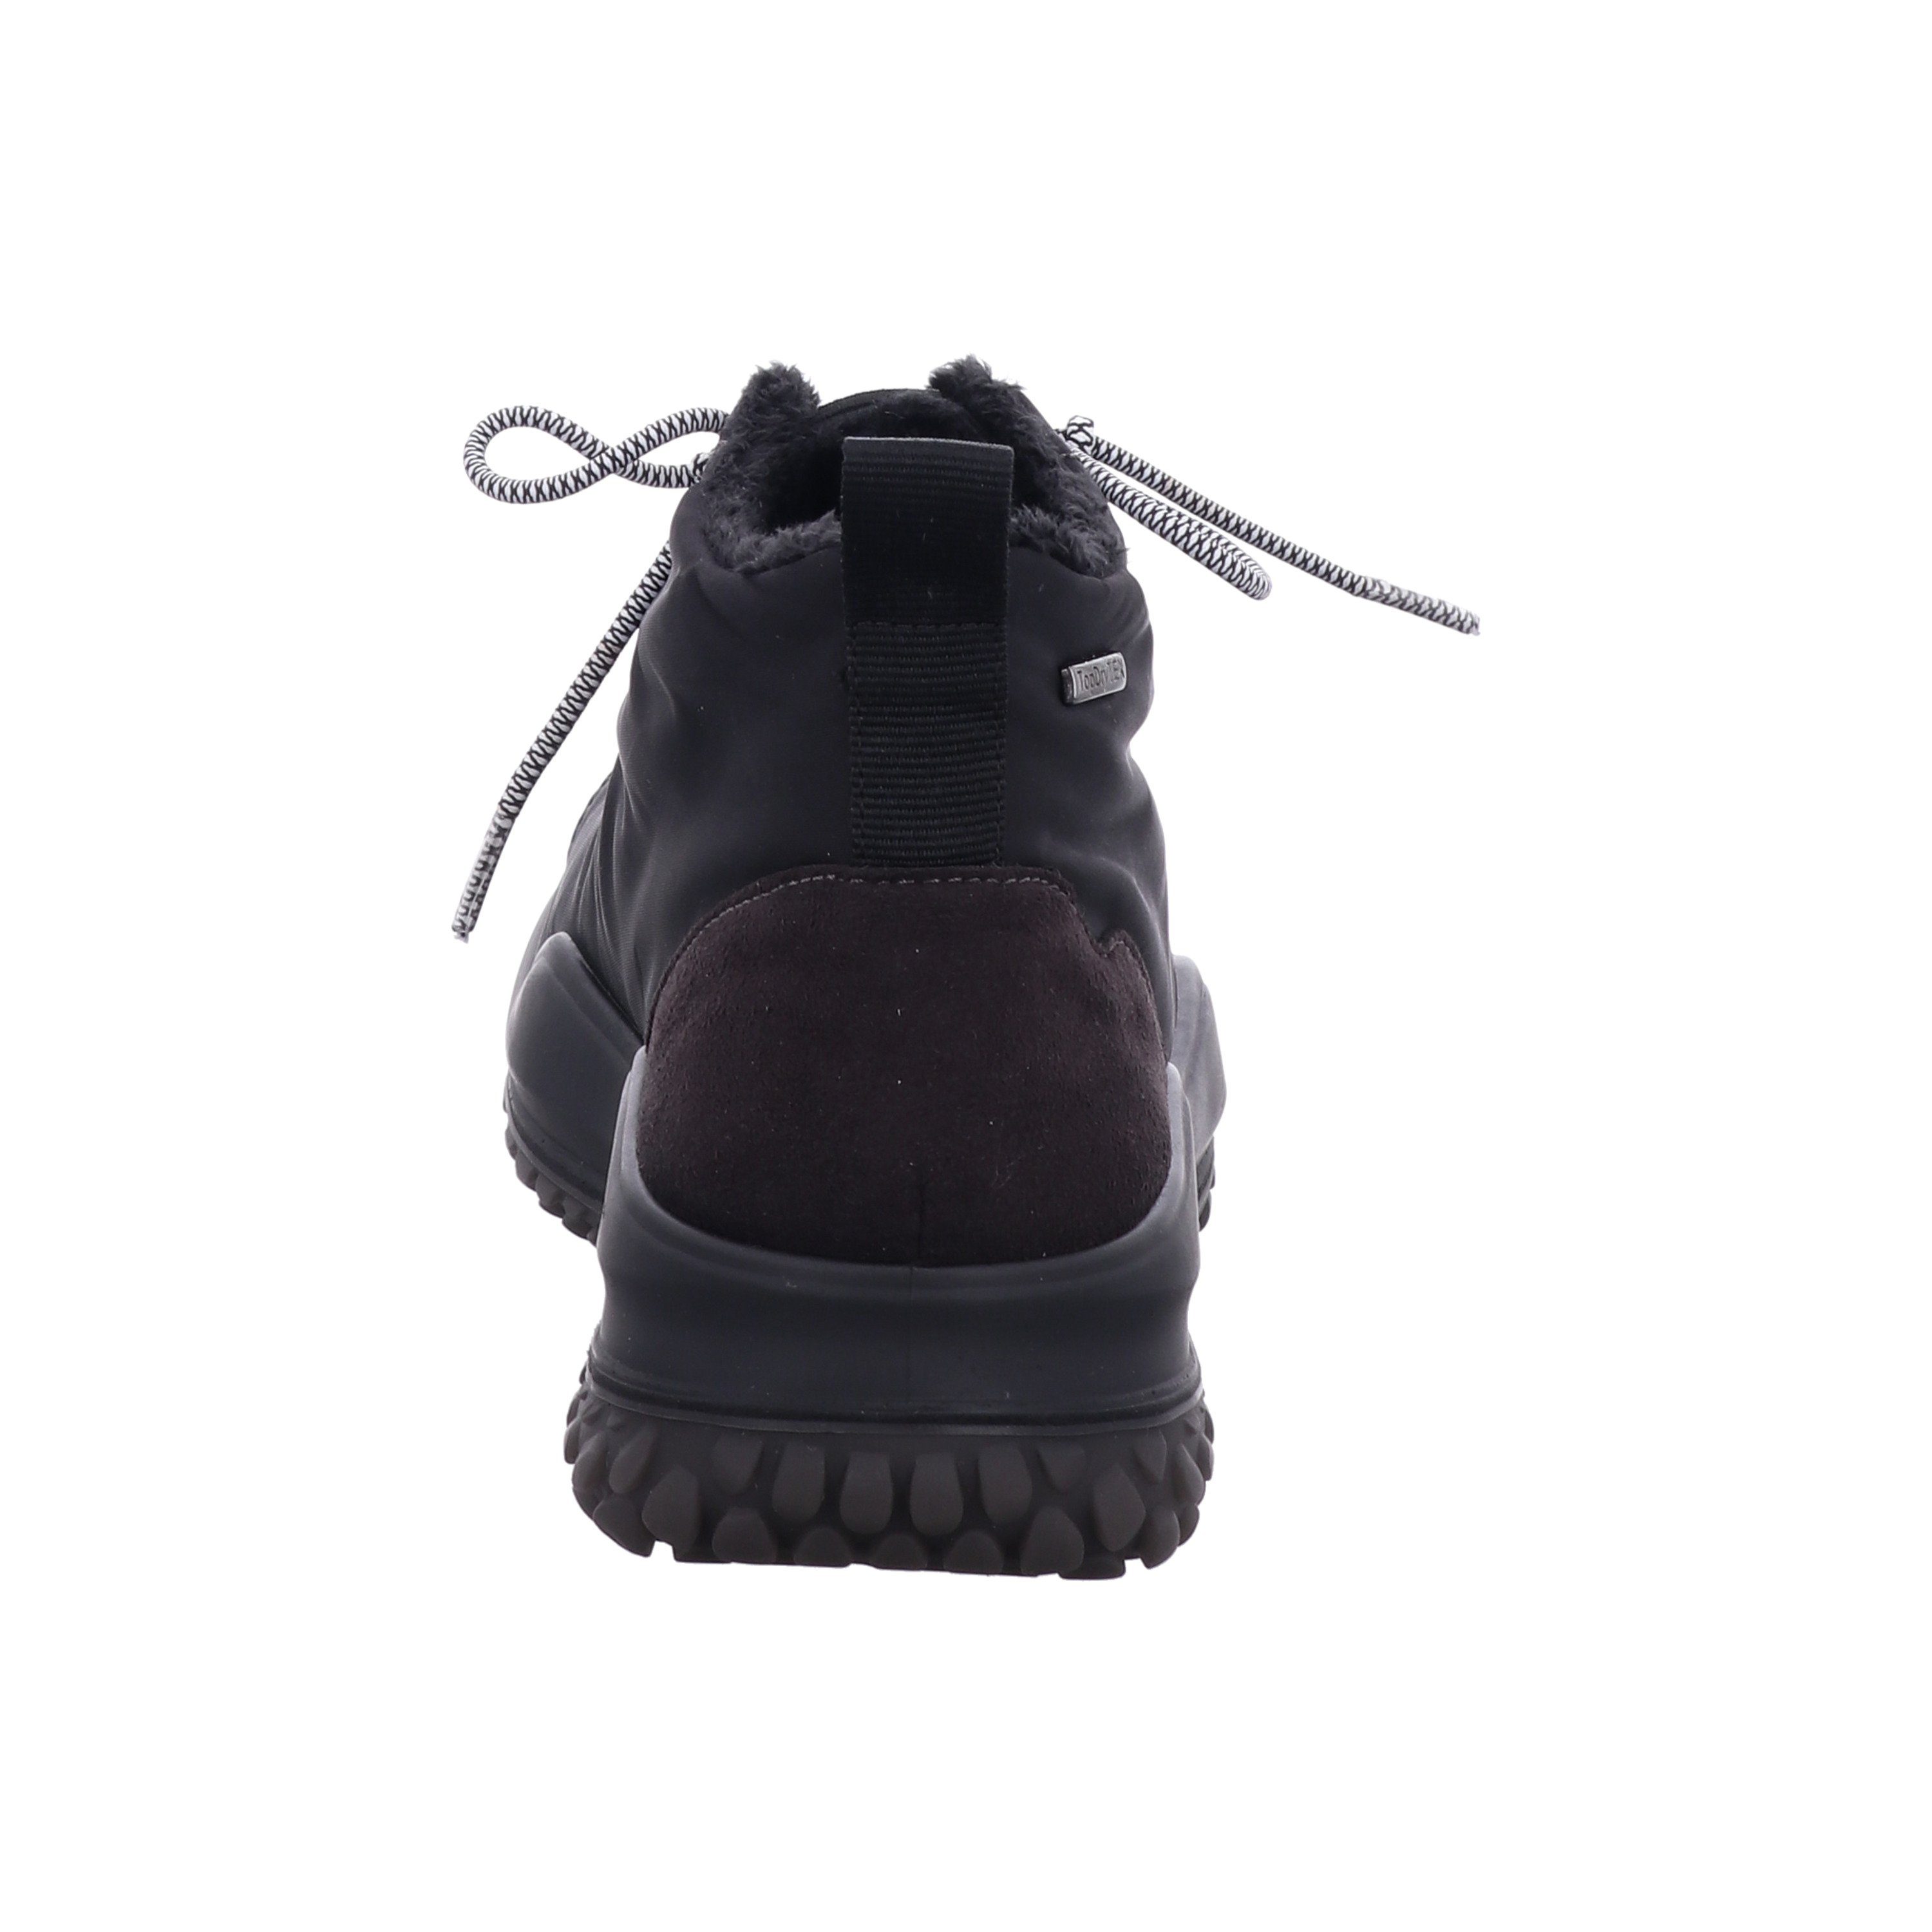 Schuhe Stiefeletten Westland Marla W17, schwarz Stiefelette